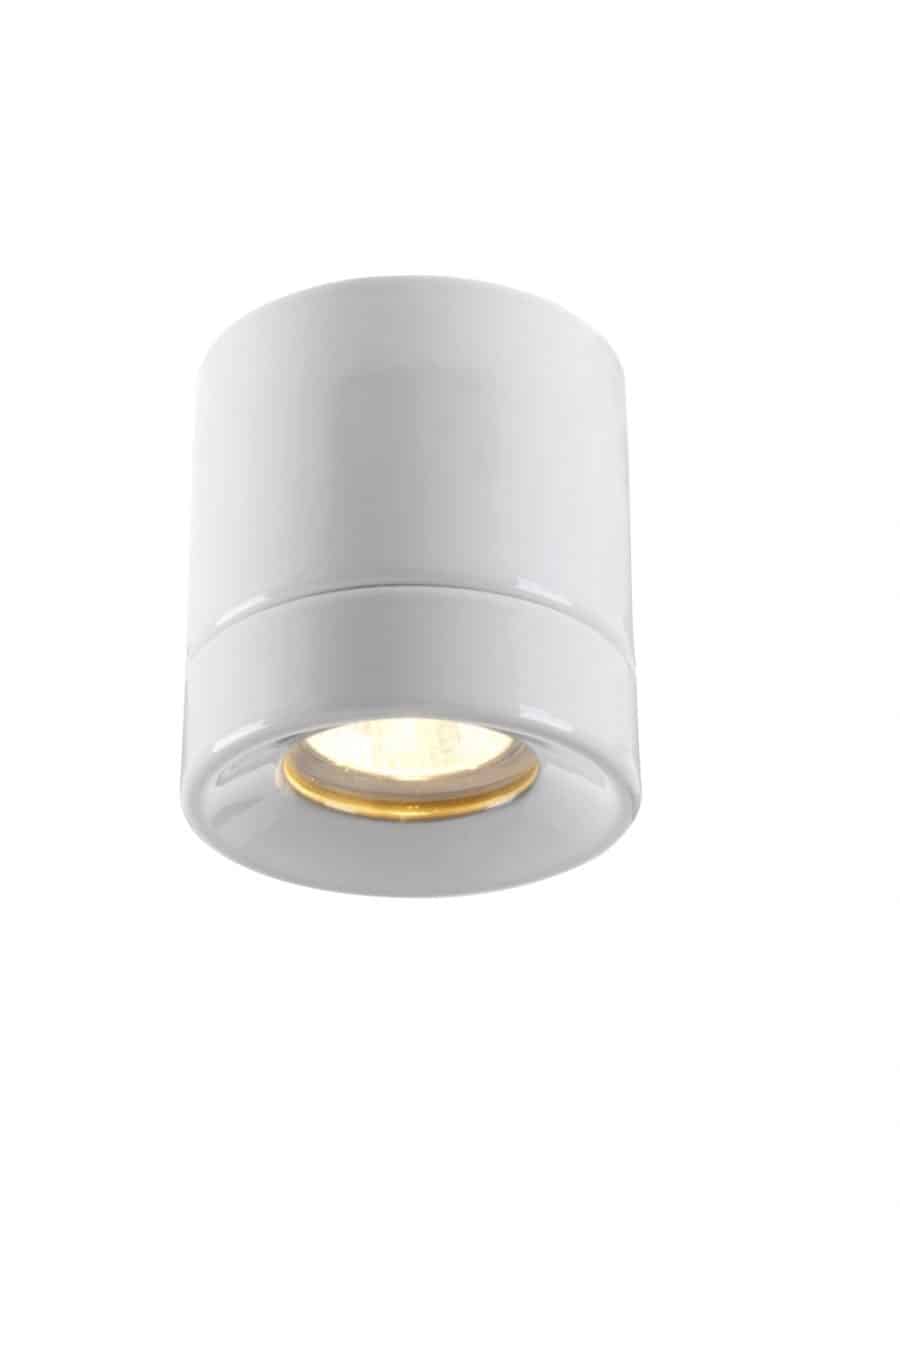 Light on ifo electric plafondlamp downlight porselein wit gu10 tuinextra